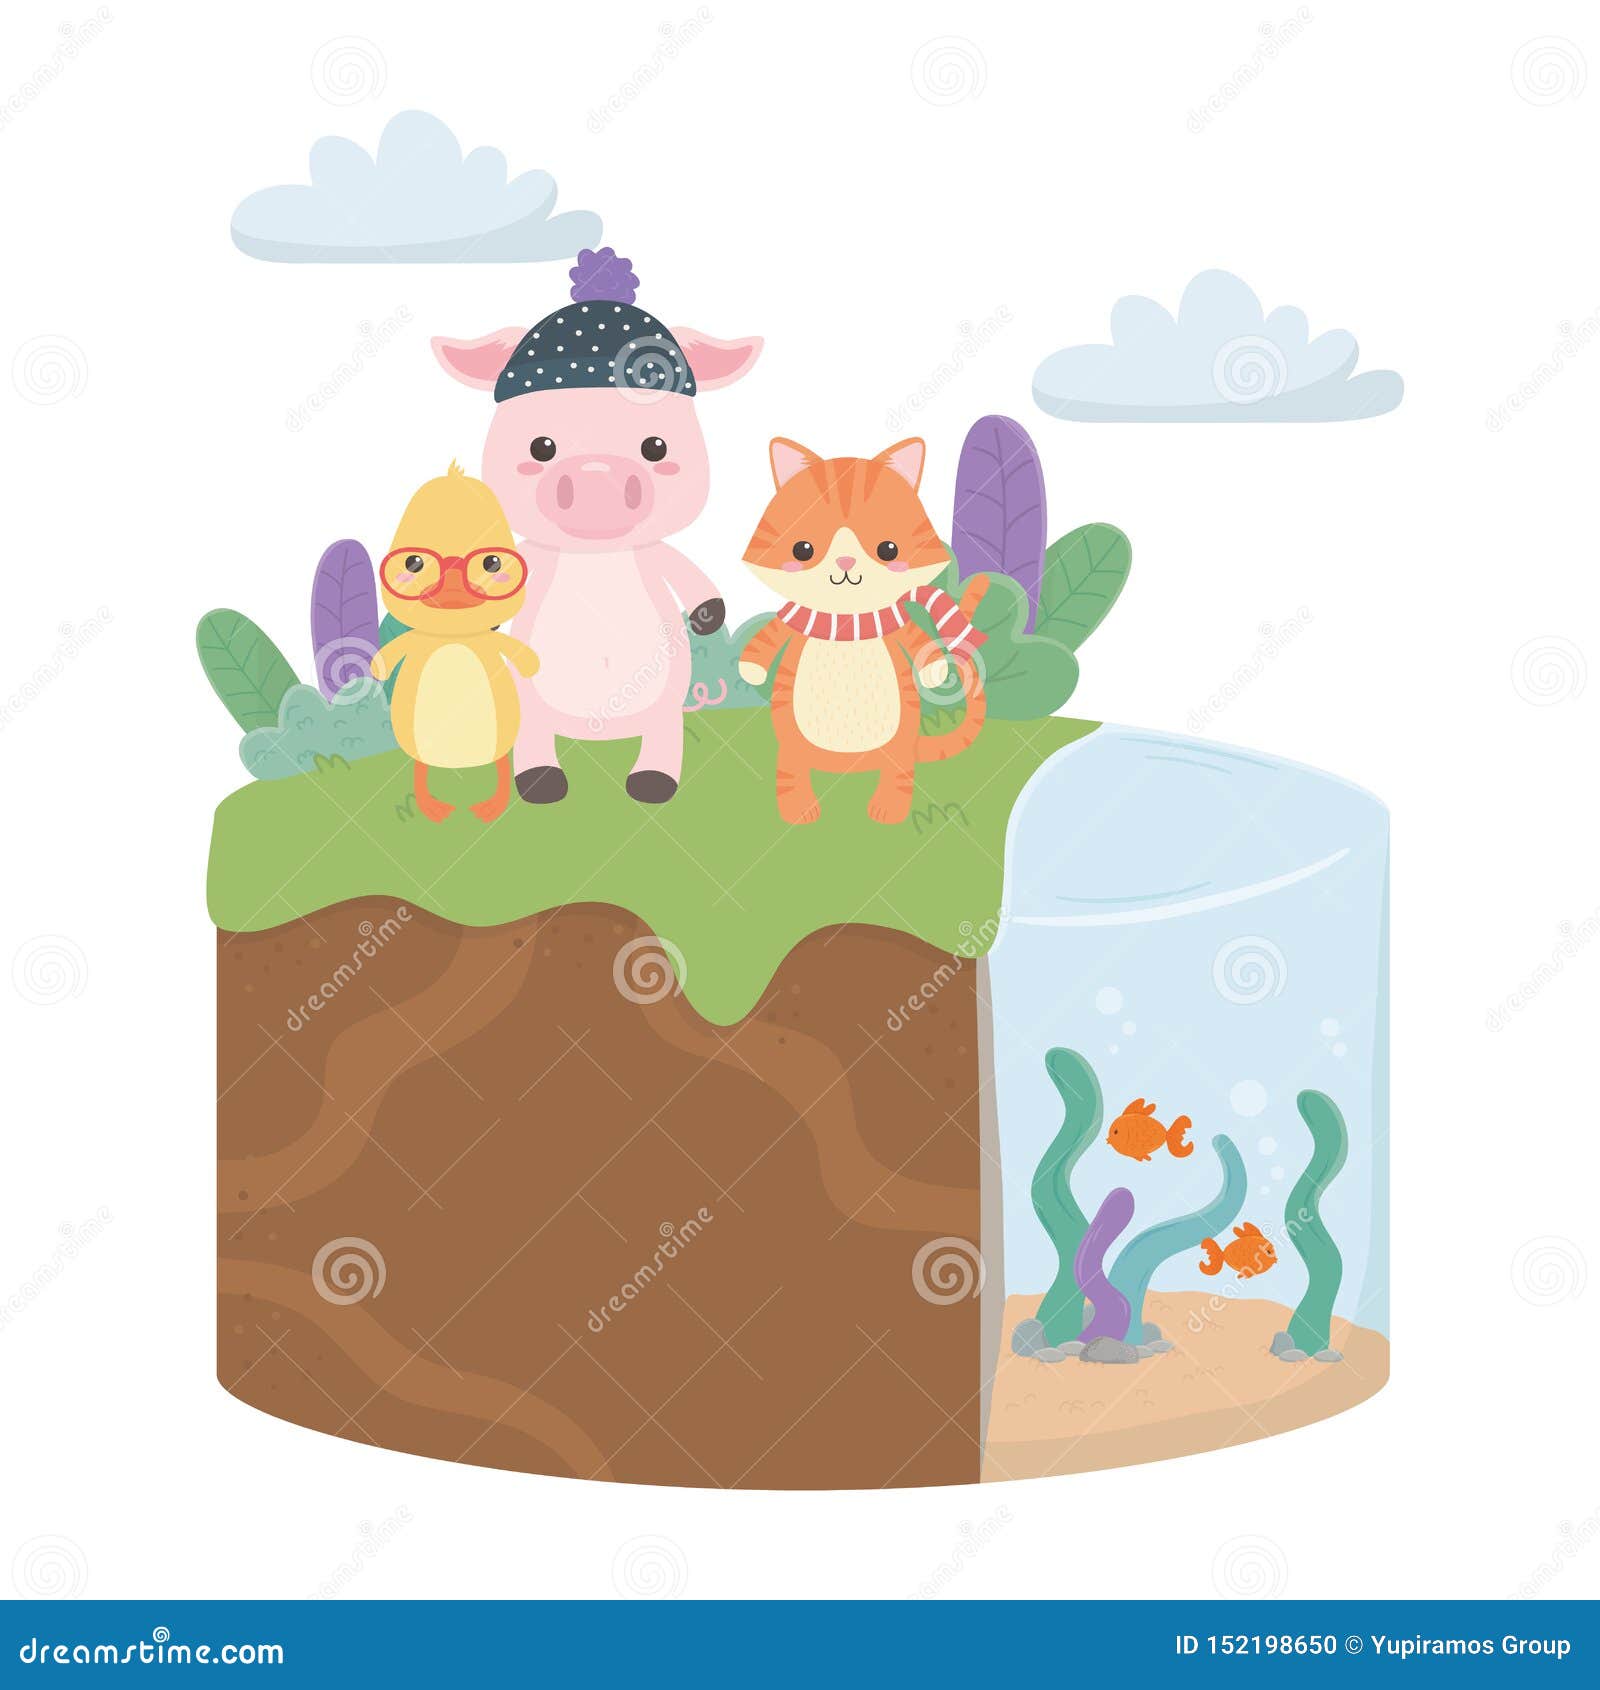 Cat Pig and Duck Cartoon Design Stock Vector - Illustration of shrubs,  simple: 152198650